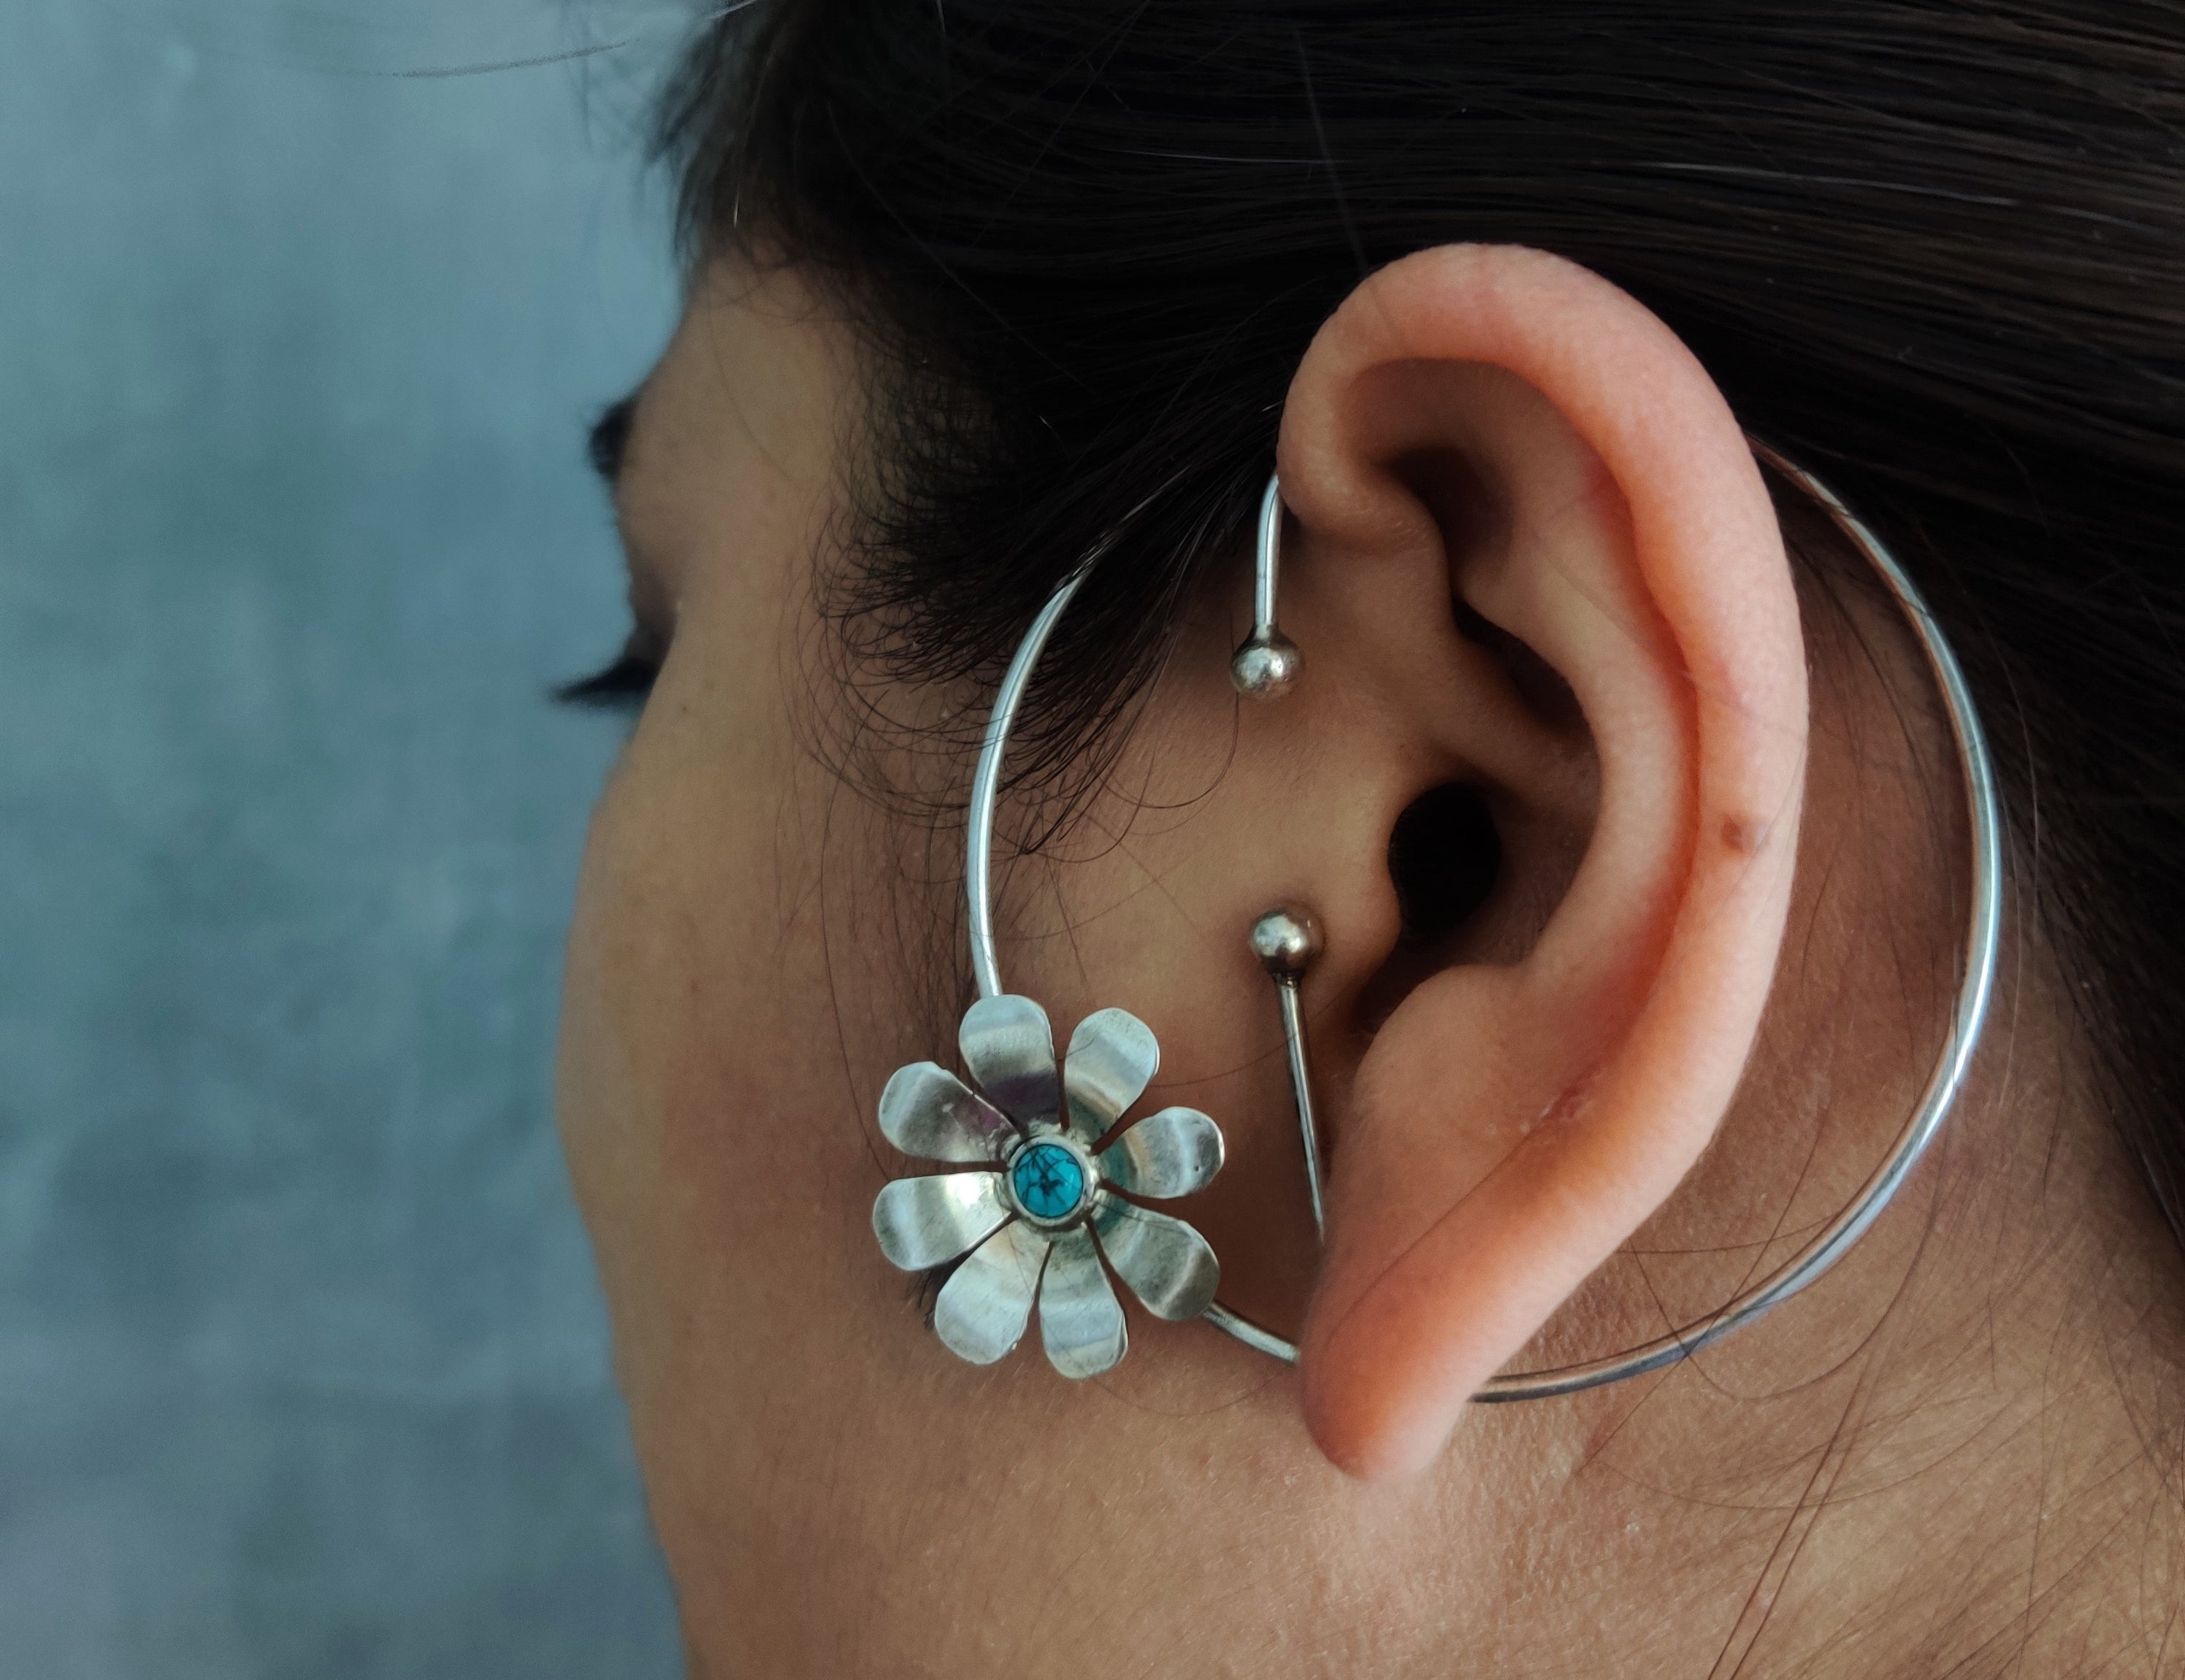 Buy unique Silver Ear Cuffs Online - Daisy Hoola Hoop by Quirksmith